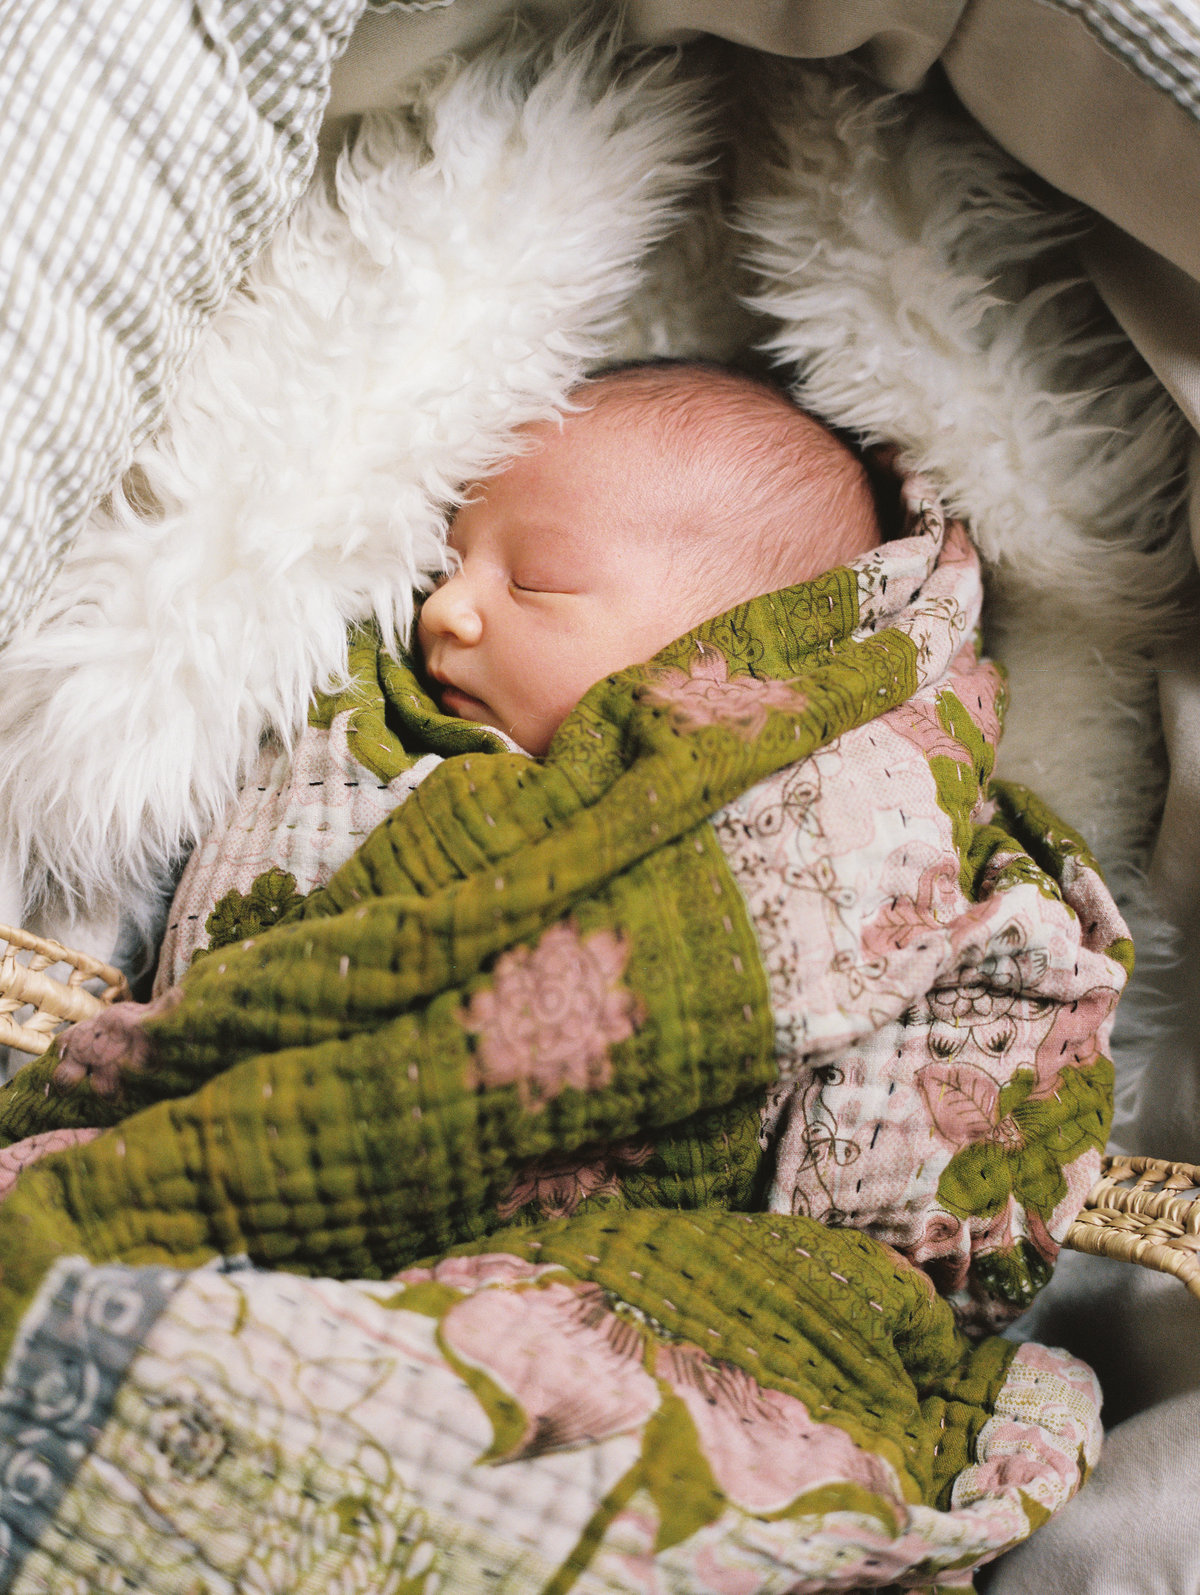 newborn baby wrapped in blankets sleeping